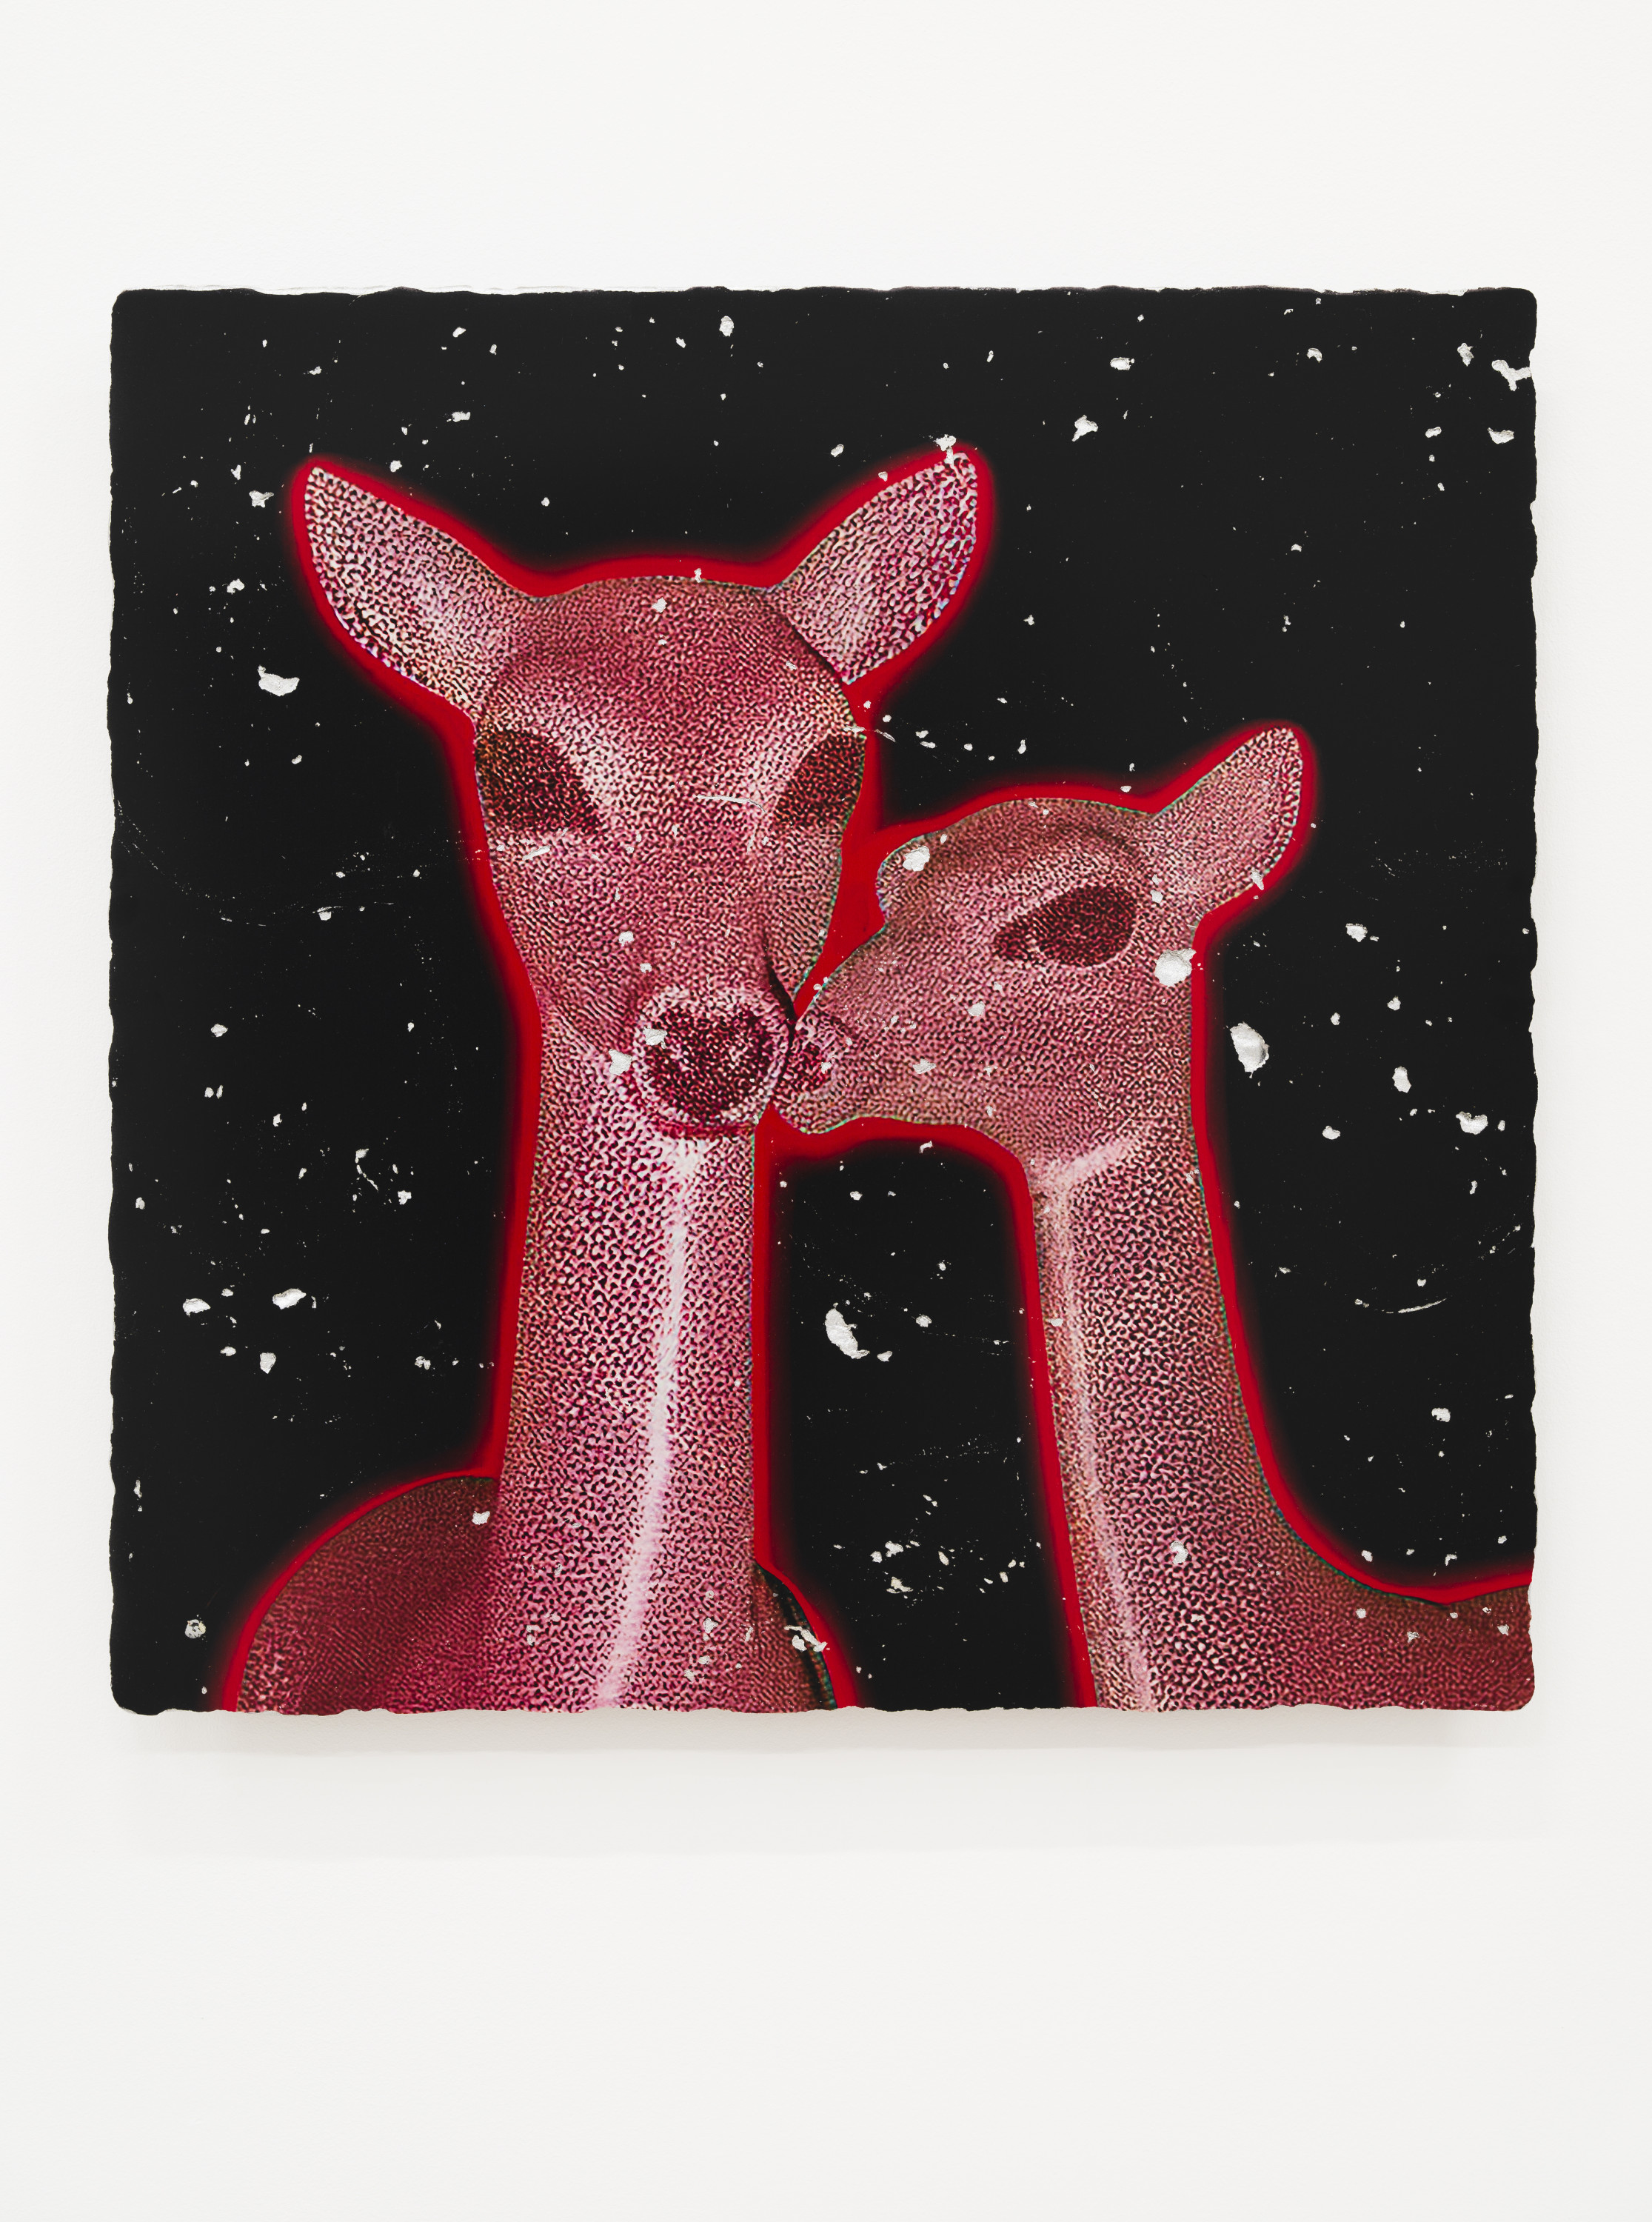 Katja Novitskova "Earthware (Random Forest, Deer Kiss 03)"